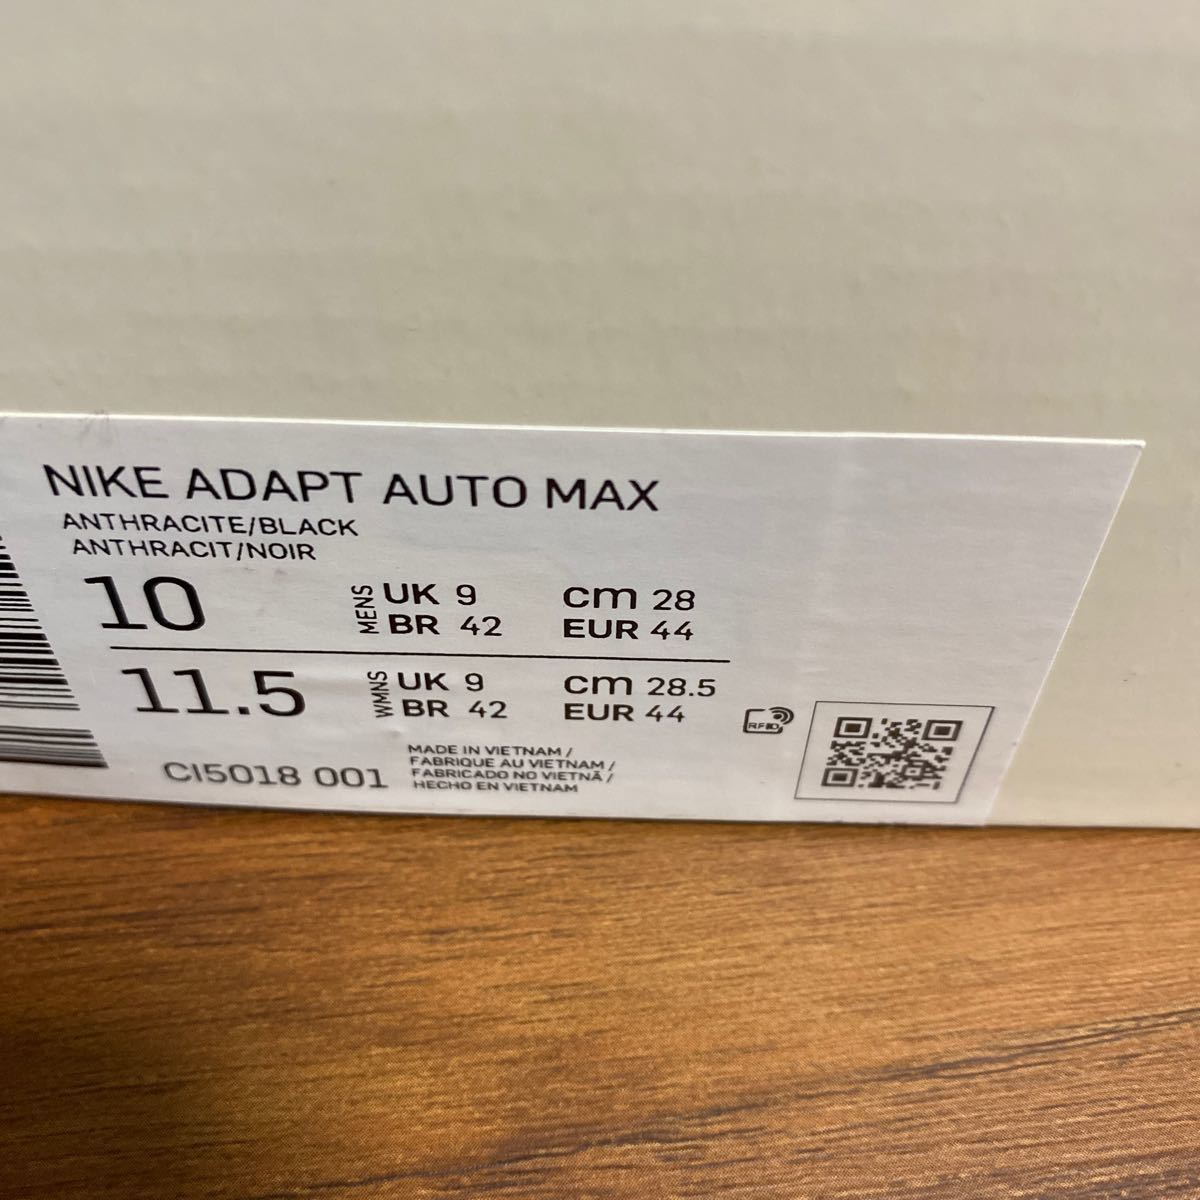 NIKE ADAPT AUTO MAX Motherboardナイキ アダプト オートマックス size: US10 28cm